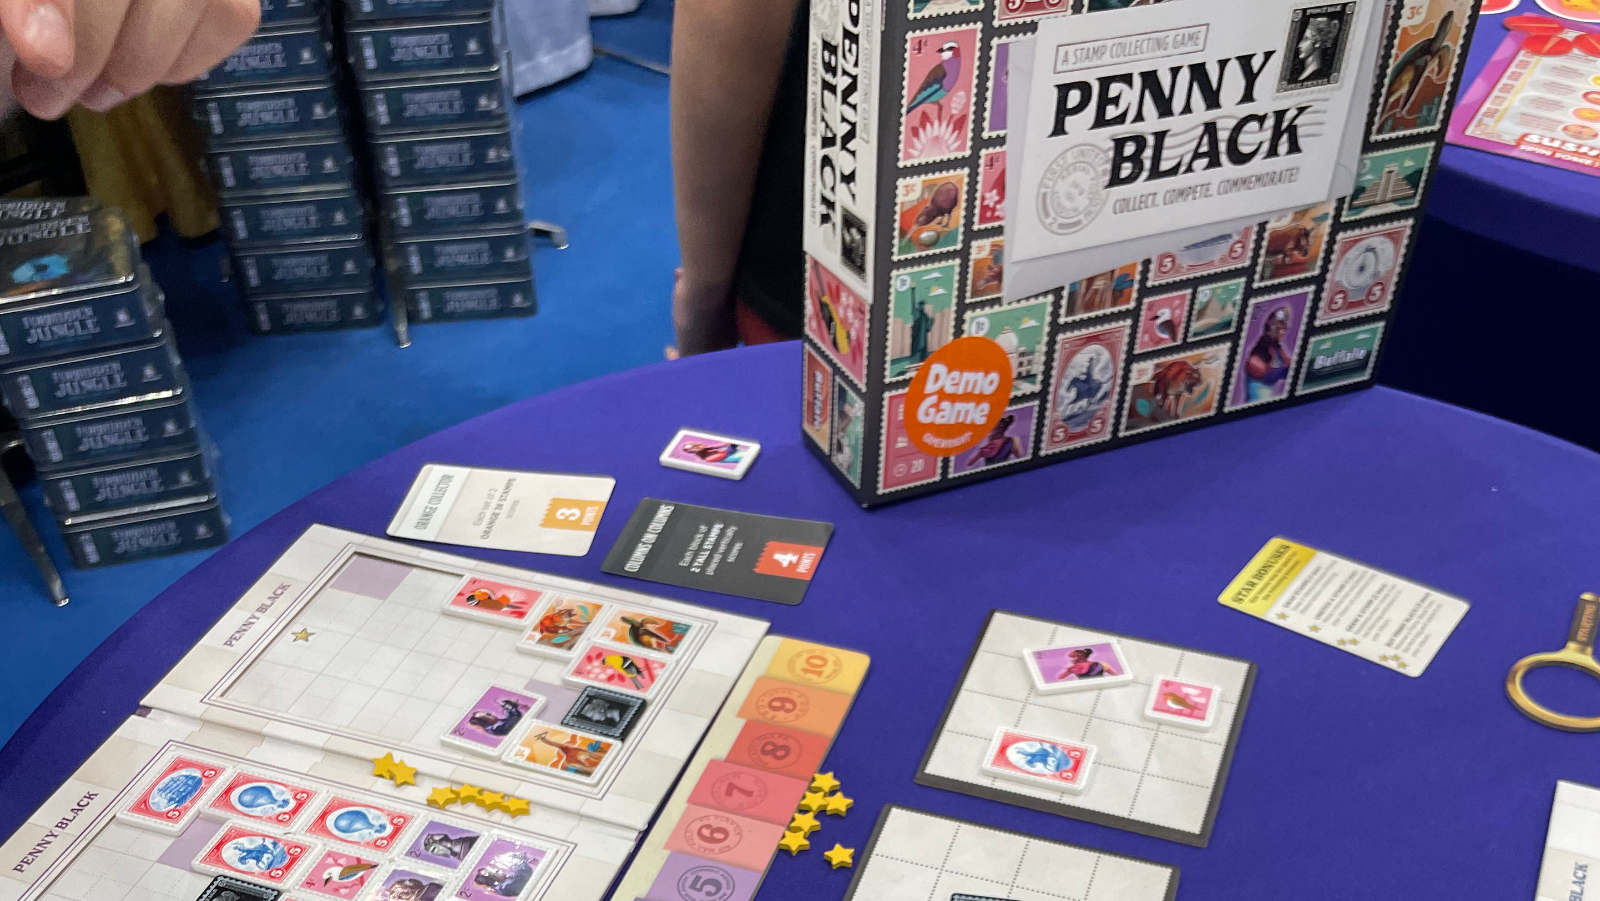 The Best Board Games at Gen Con 2023 - Paste Magazine